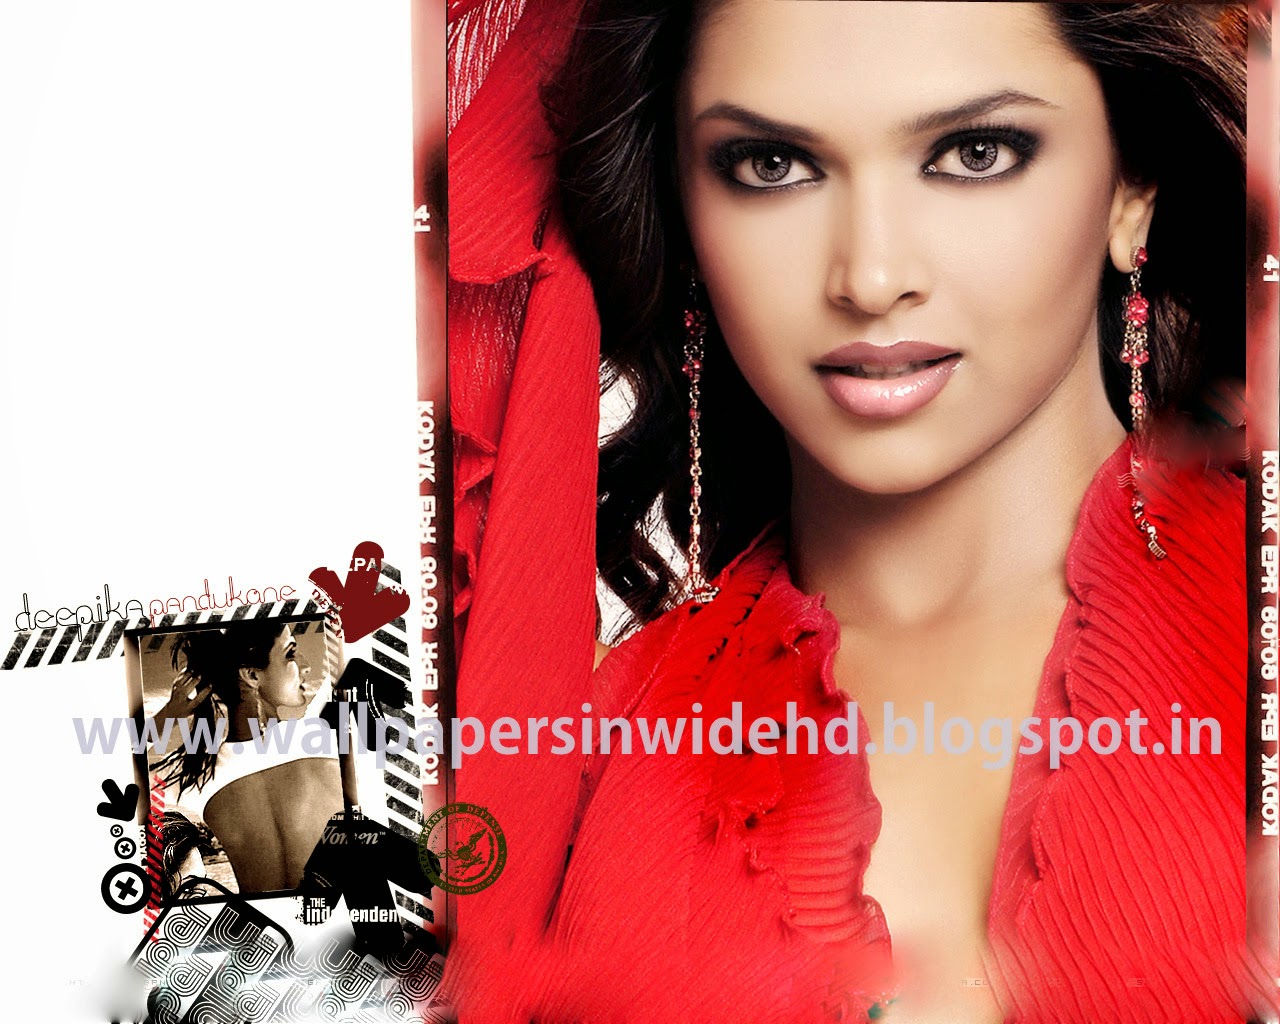 Deepika Padukone Hd Wallpapers Free Download 100 Hdwallpapers